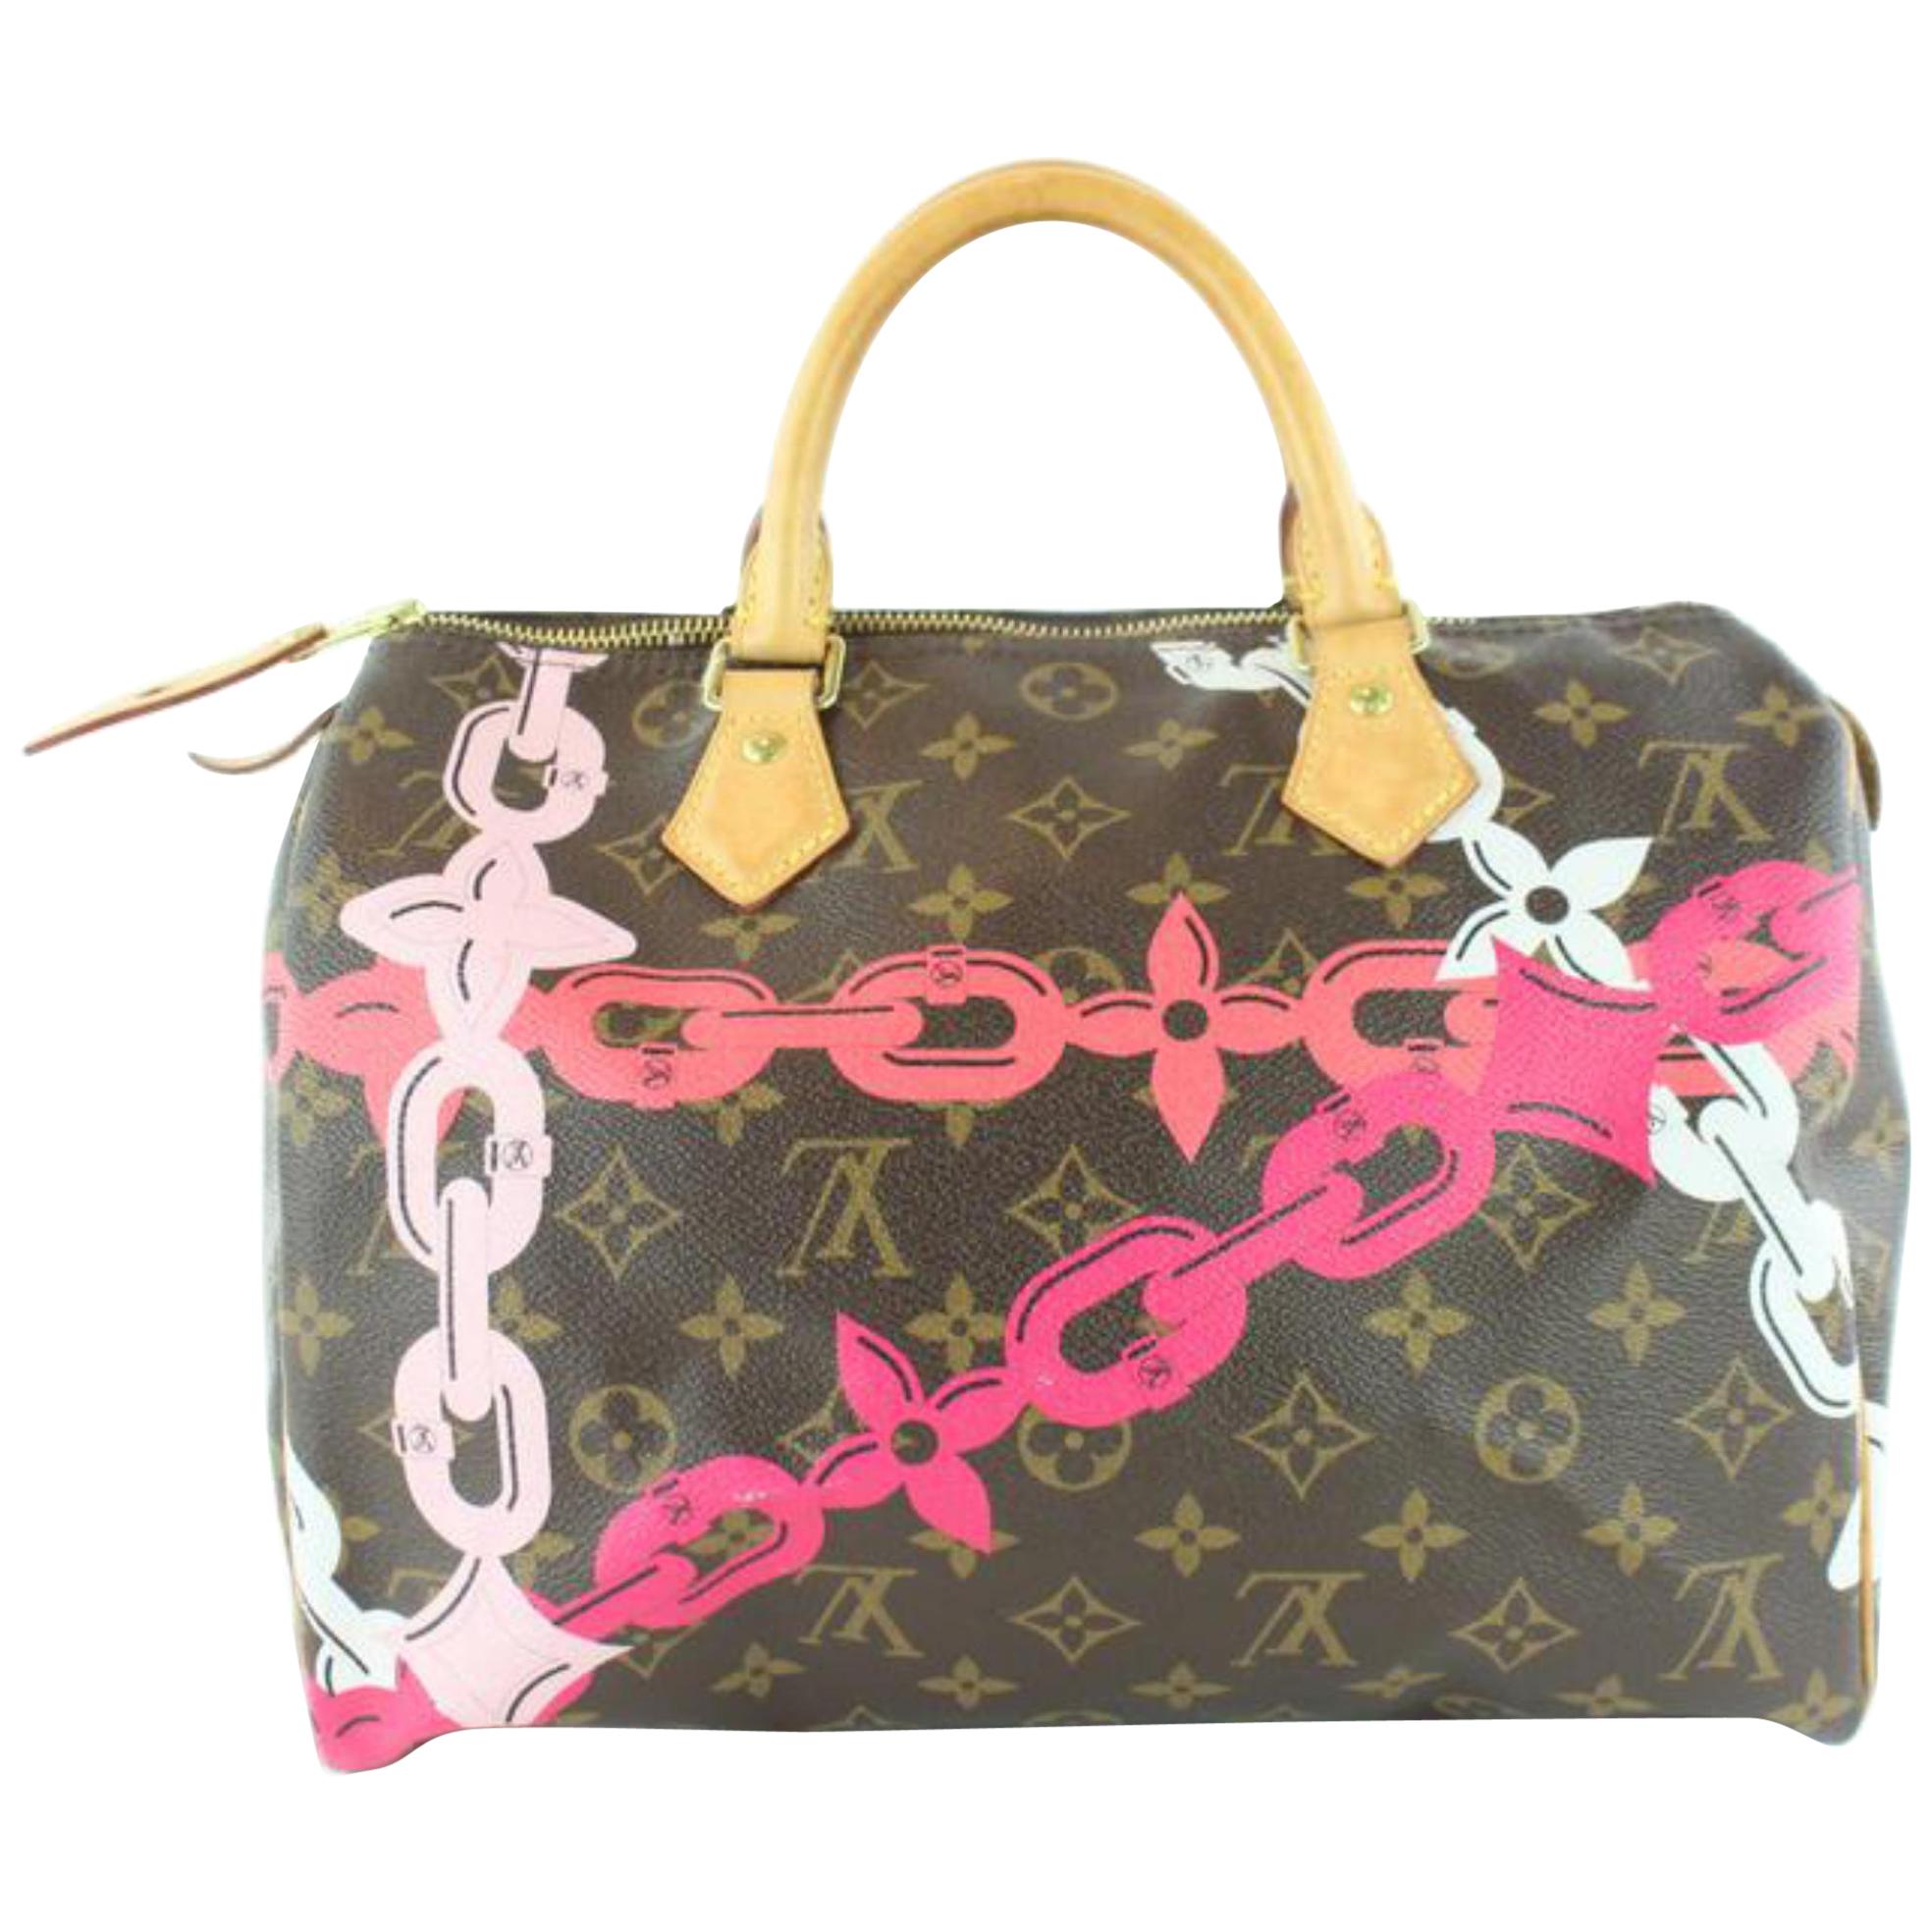 Louis Vuitton Speedy Limited Edition Chain Flower 30 22lz1129 Pink Satchel For Sale